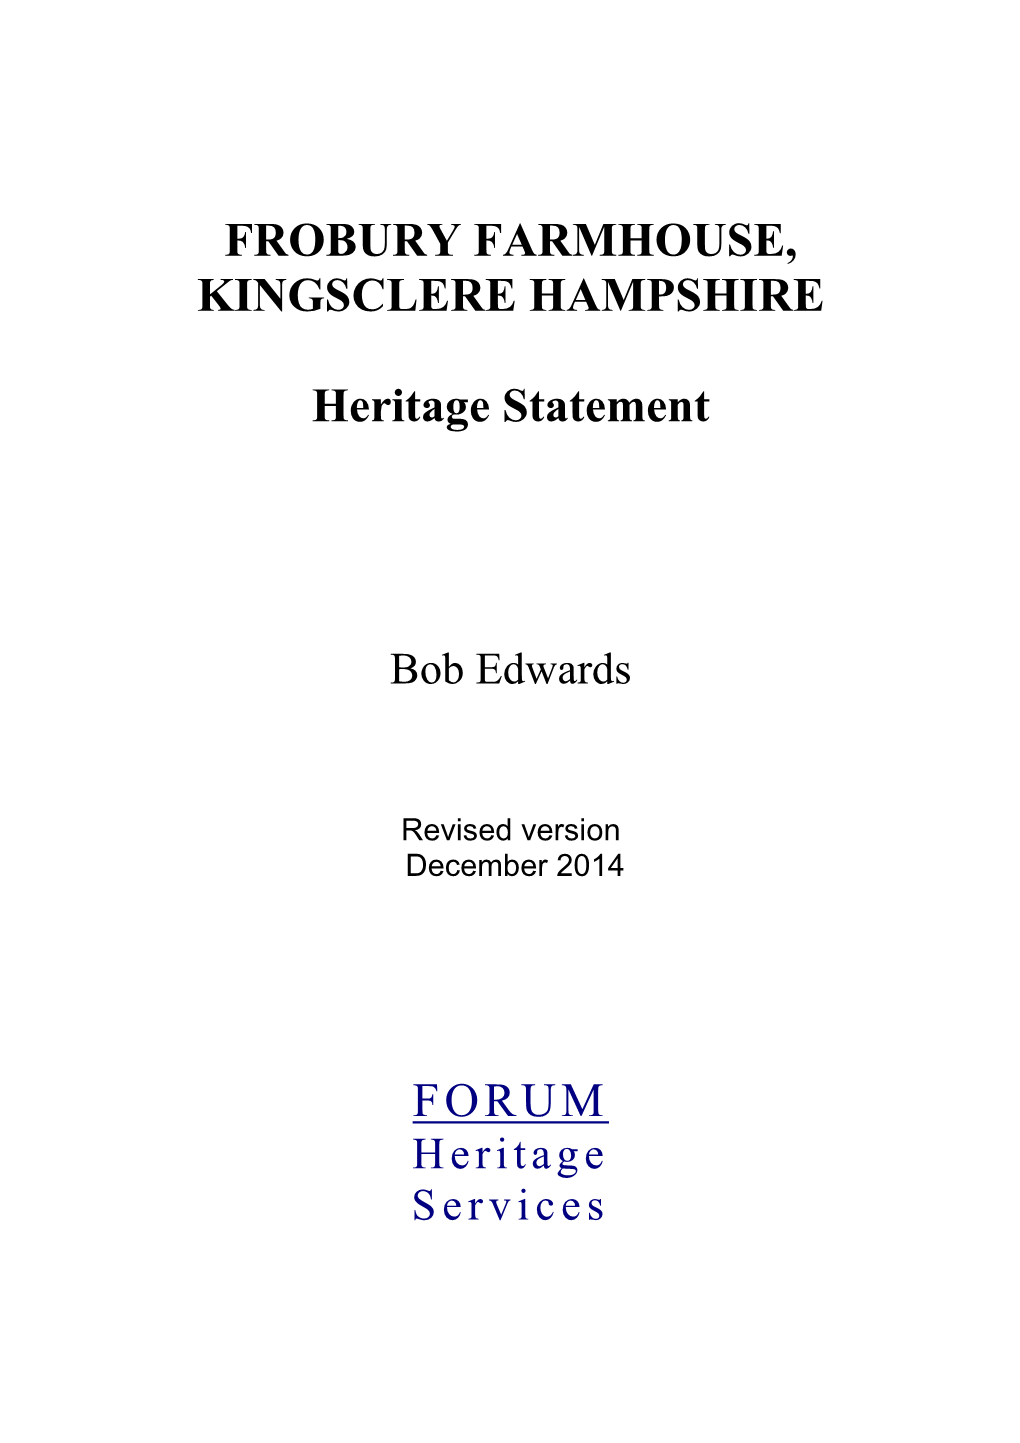 Frobury Farmhouse, Kingsclere Hampshire